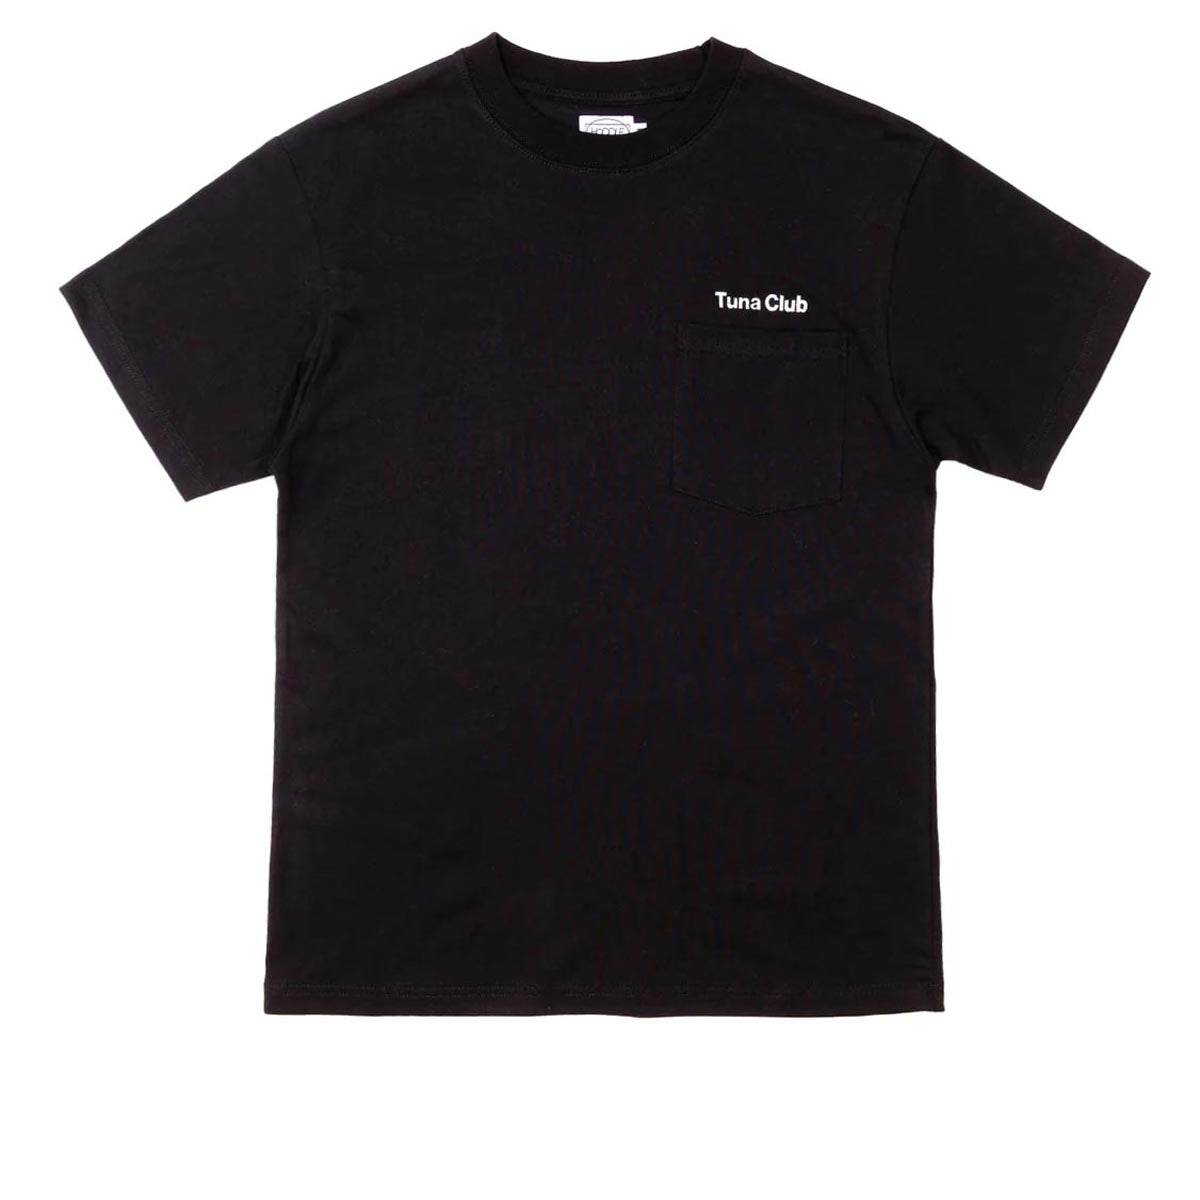 Hoddle Tuna Club T-Shirt - Black image 2